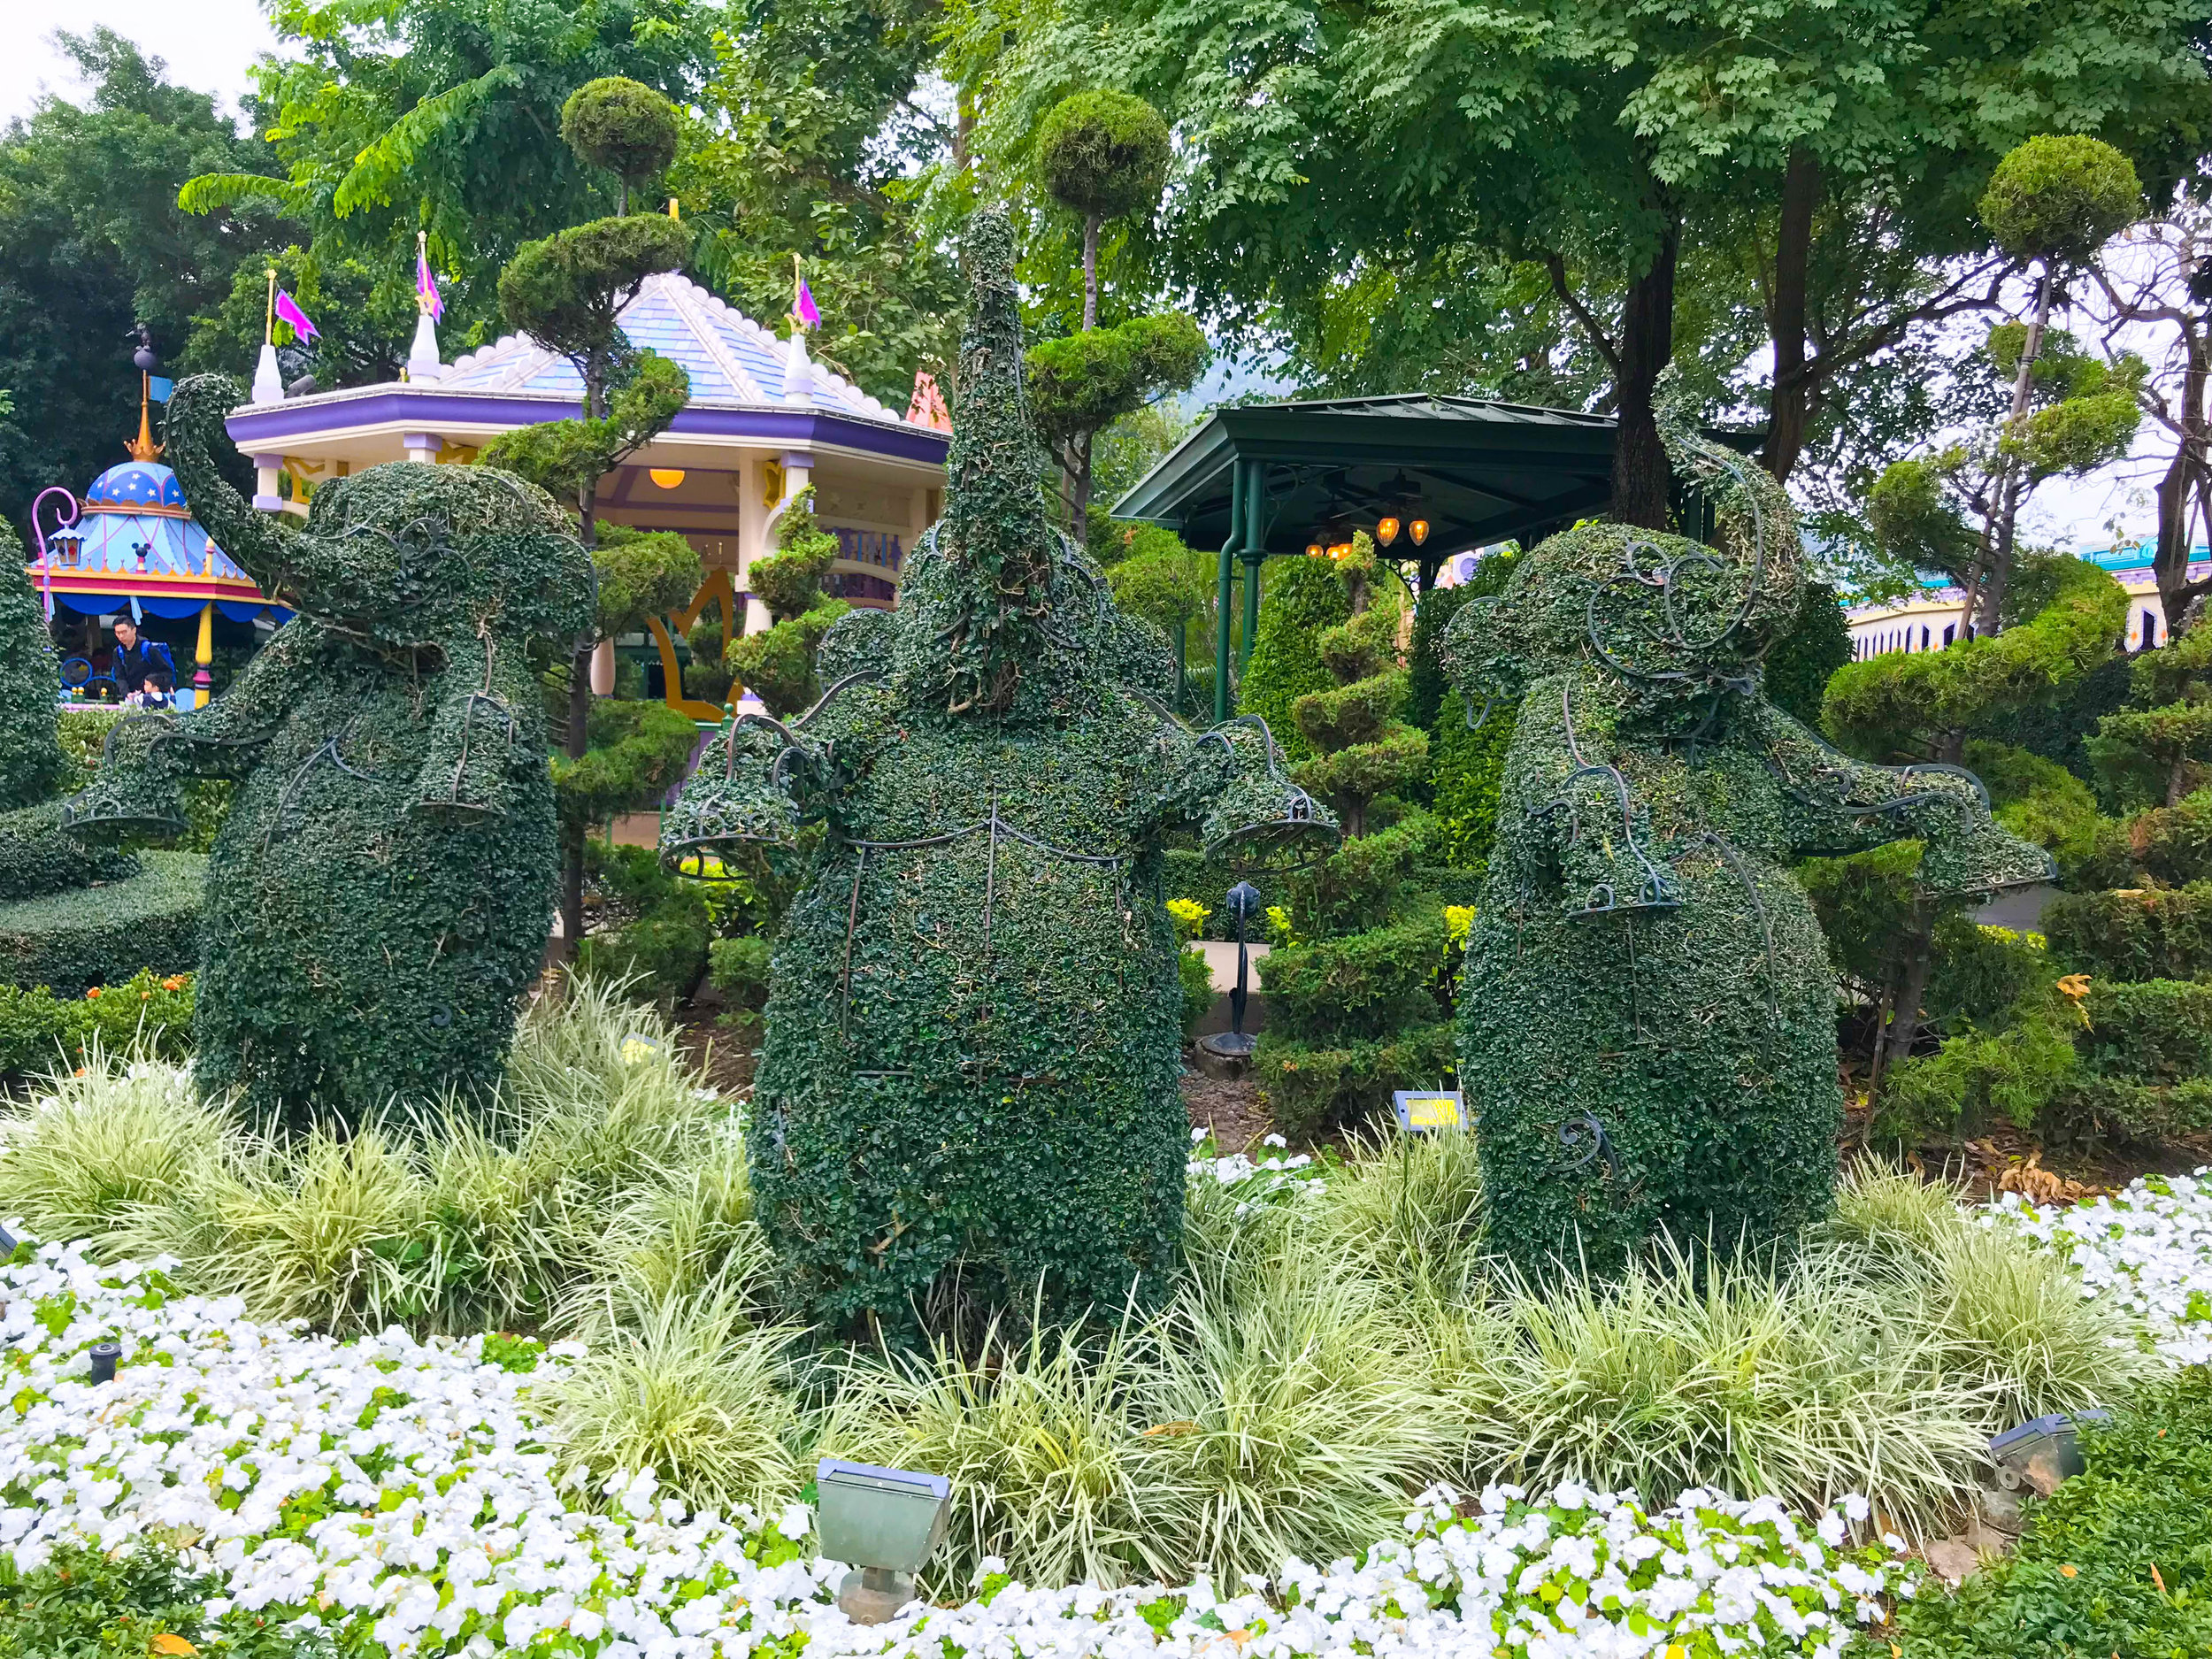 Hong Kong Disneyland - Fantasia Garden